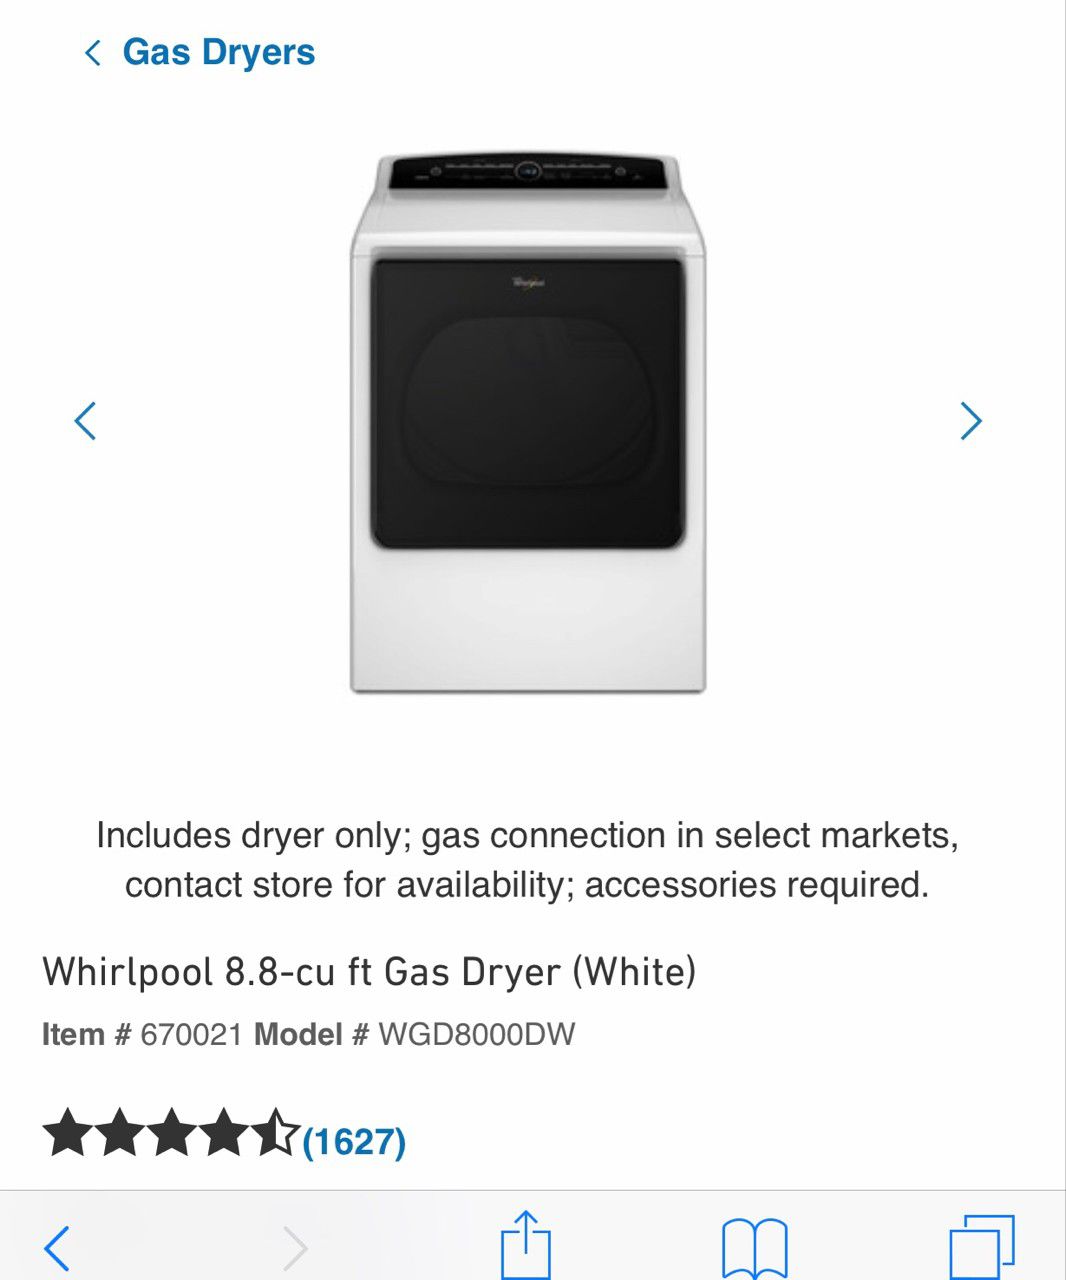 Whirlpool new appliances